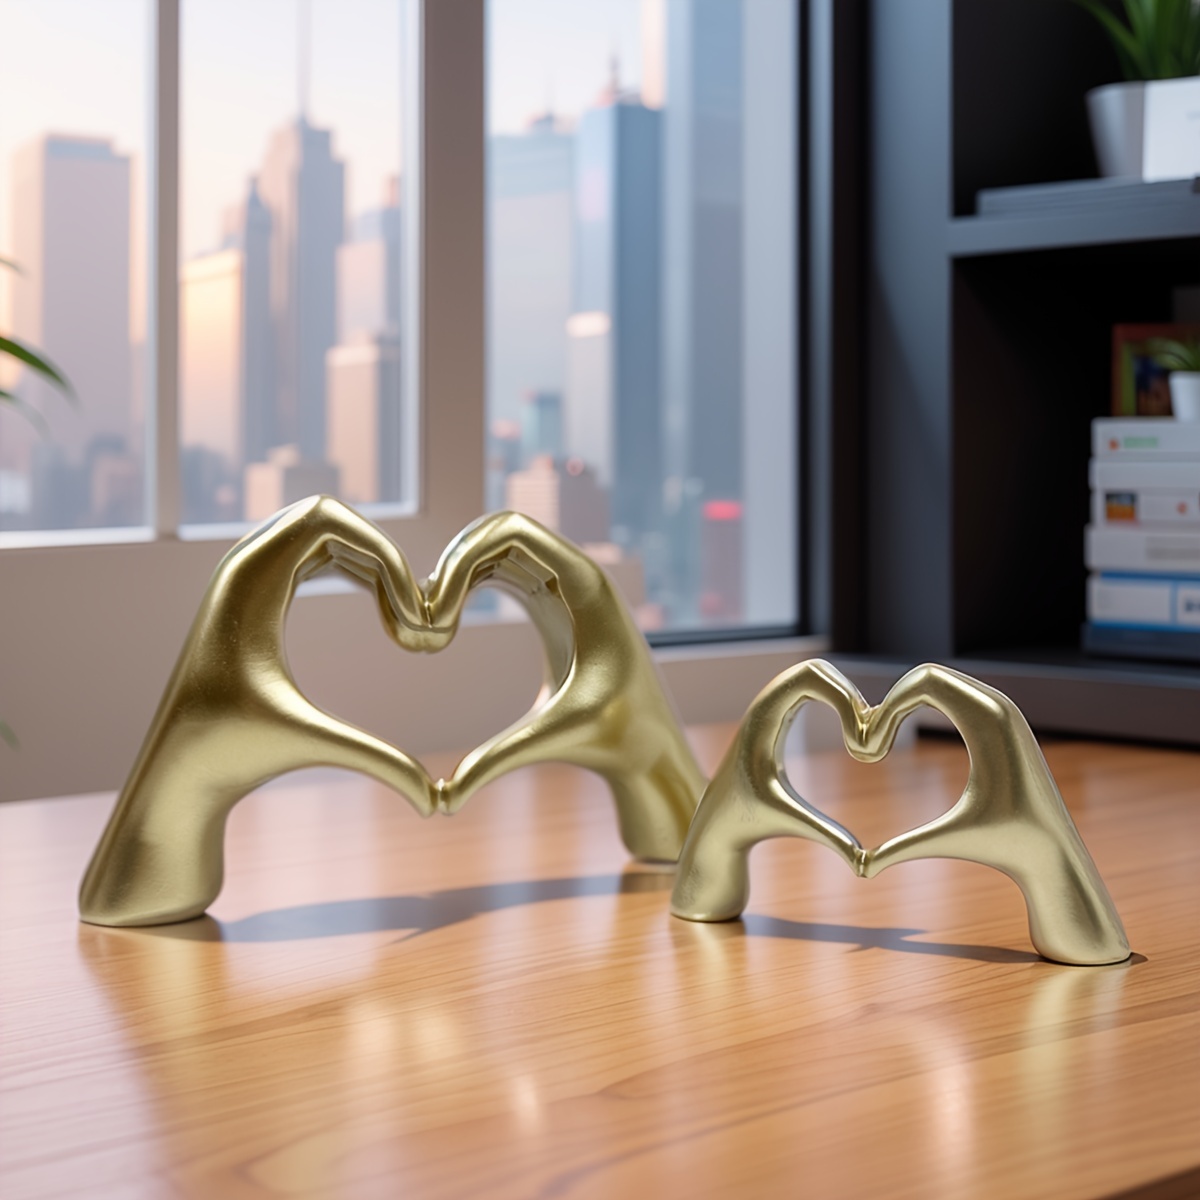 Heart Hands Sculpture - Romantic Hand Gesture Desk Statues Heart Figurine  Ornament - Resin Abstract Hand Love Gesture Statue Figurines For Wedding  Hom